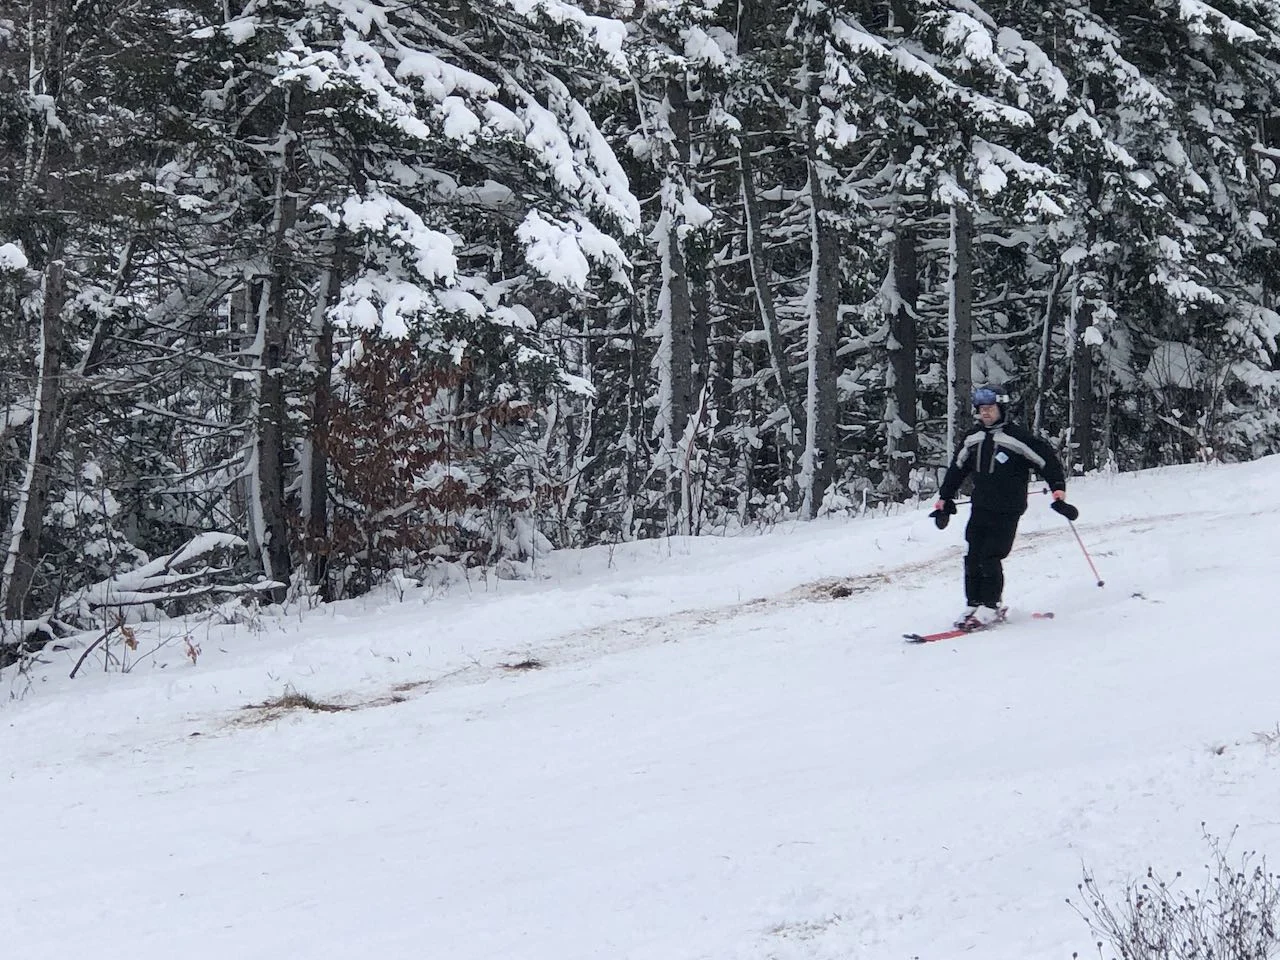 Crowds flock to ski hill in Nova Scotia as season finally opens